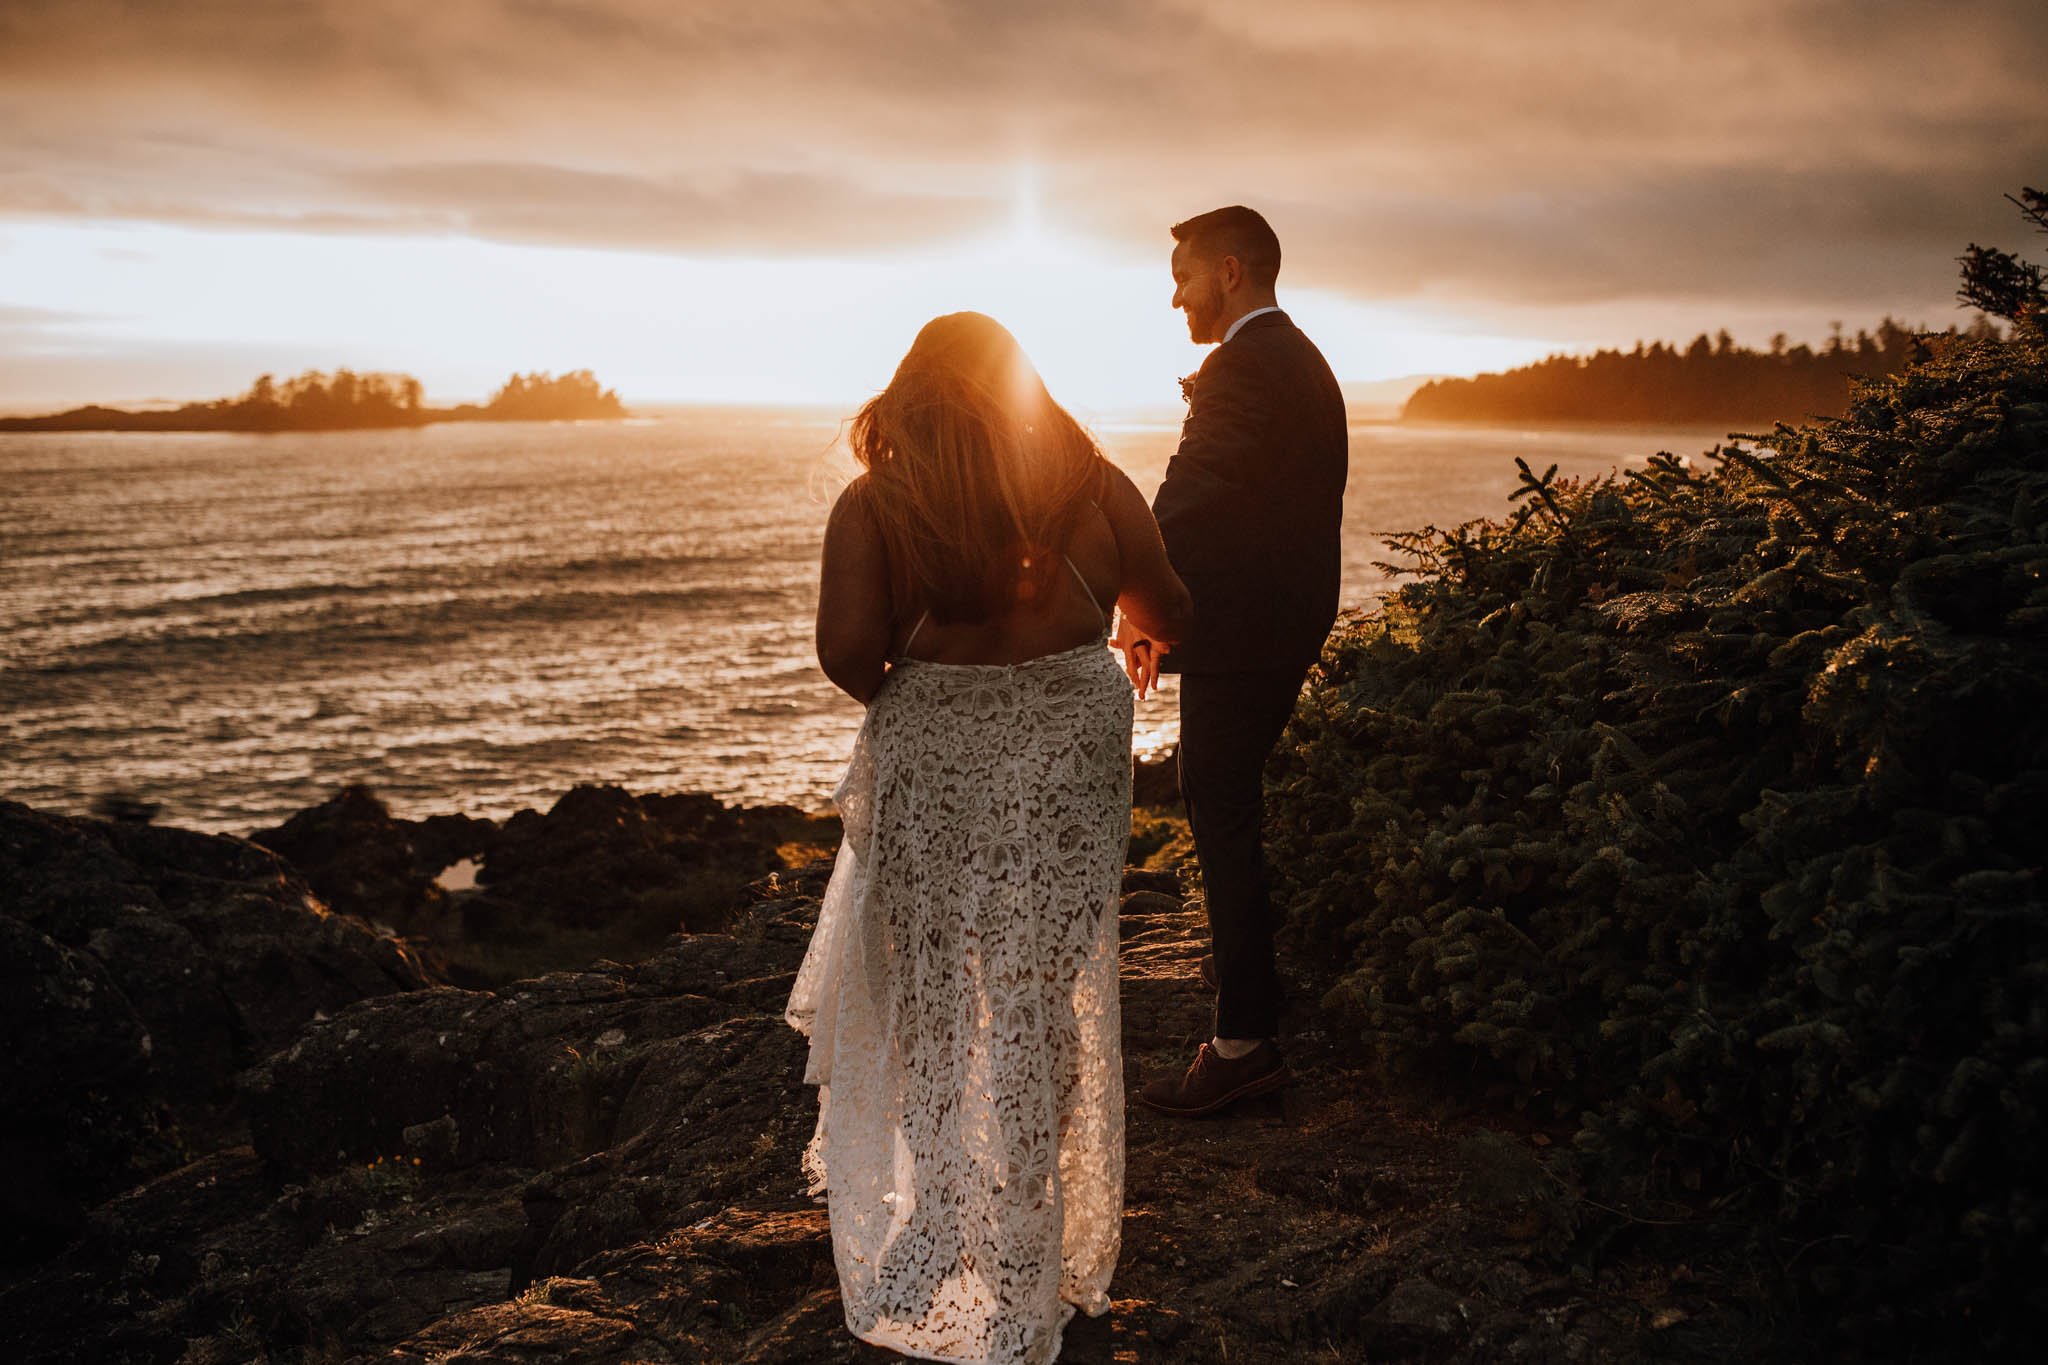 Clarize and David Elopement - Tofino Vancouver Island British Columbia - Elyse Anna Photography-2478.jpg